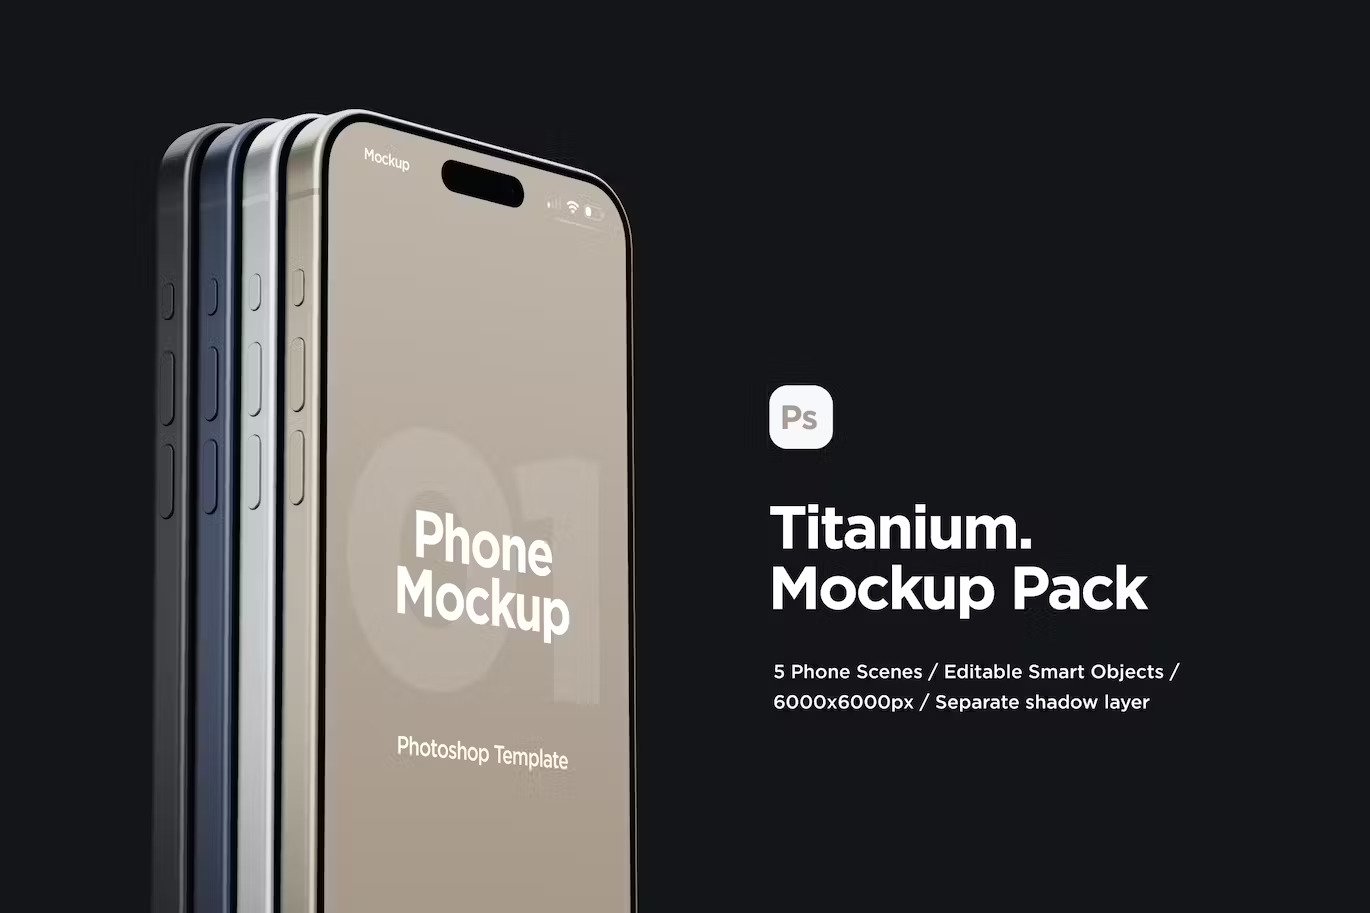 Titanium phone mockup pack